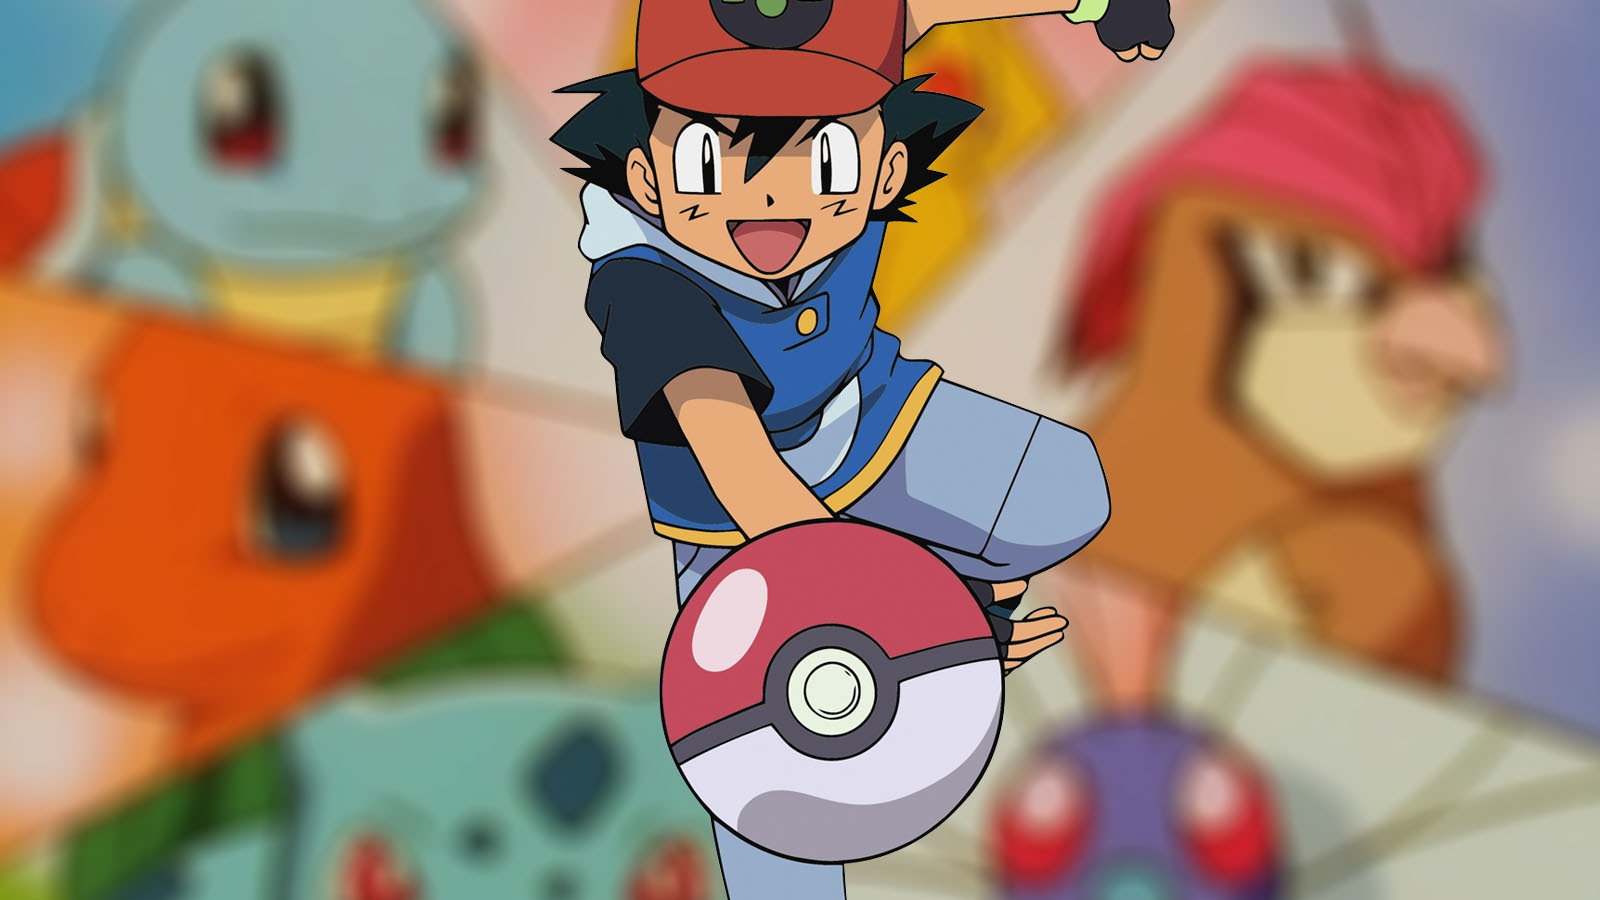 Ash Ketchum Becomes a Pokémon Master After More Than 1000 Episodes